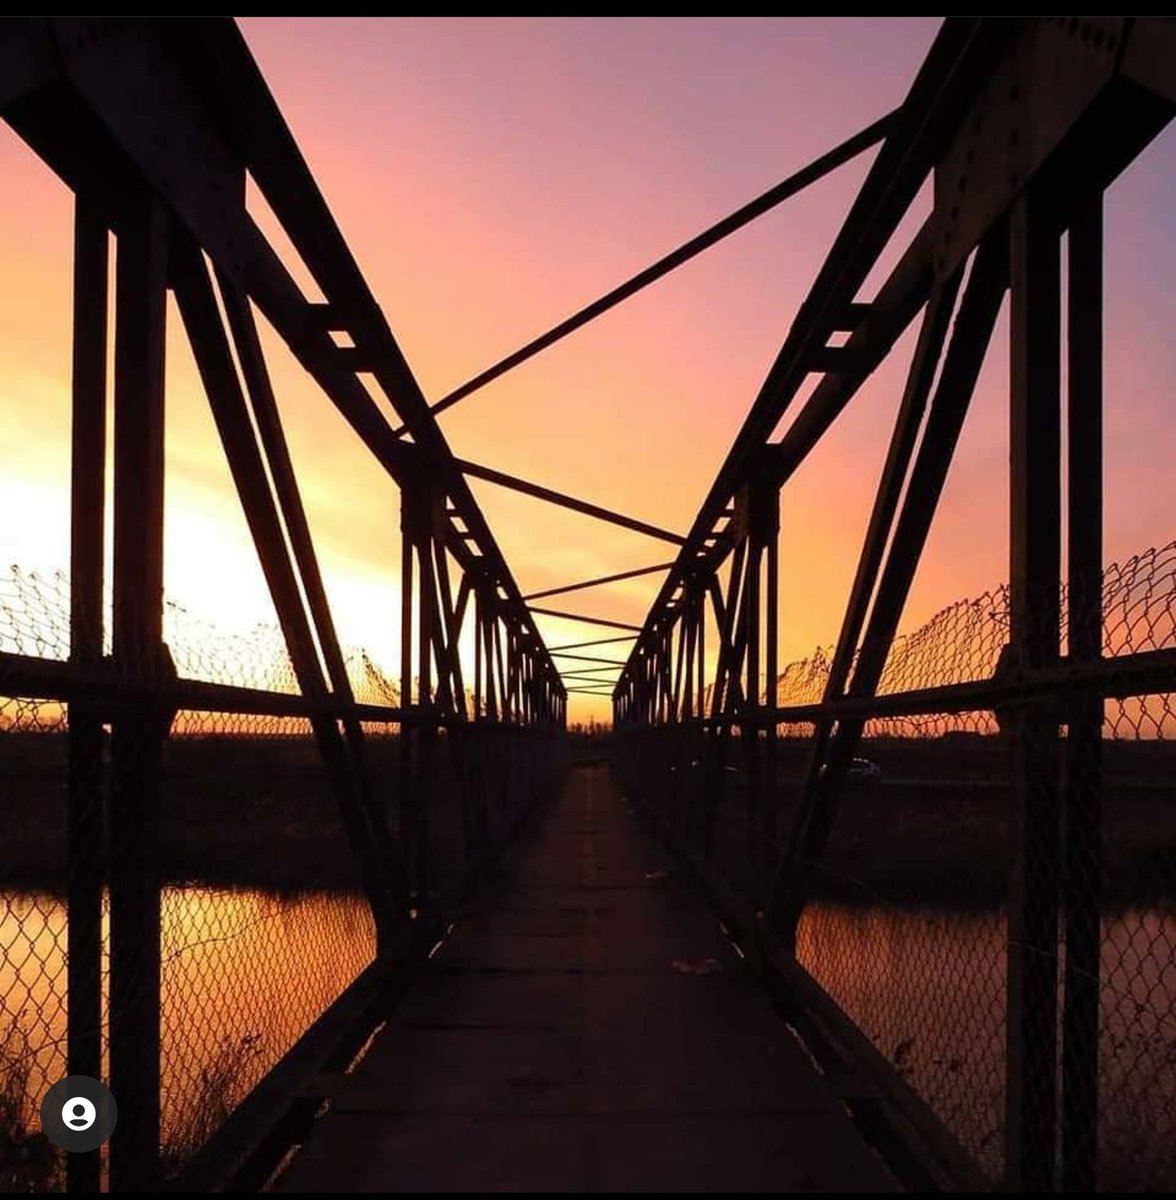 When nature makes a stunning shot fit for Synthwave for you 💜💜💜
📸 @pia.nata.lia
.
.
.
.
.
.
.
.
.
.
.
.
.
#sunset #sunrise #synthwave #purple #purpletones #snythpop #chillwavemusic #bridge #lines #landscape #retrowave #newretro
instagram.com/p/CLRQR2PFqn6/…